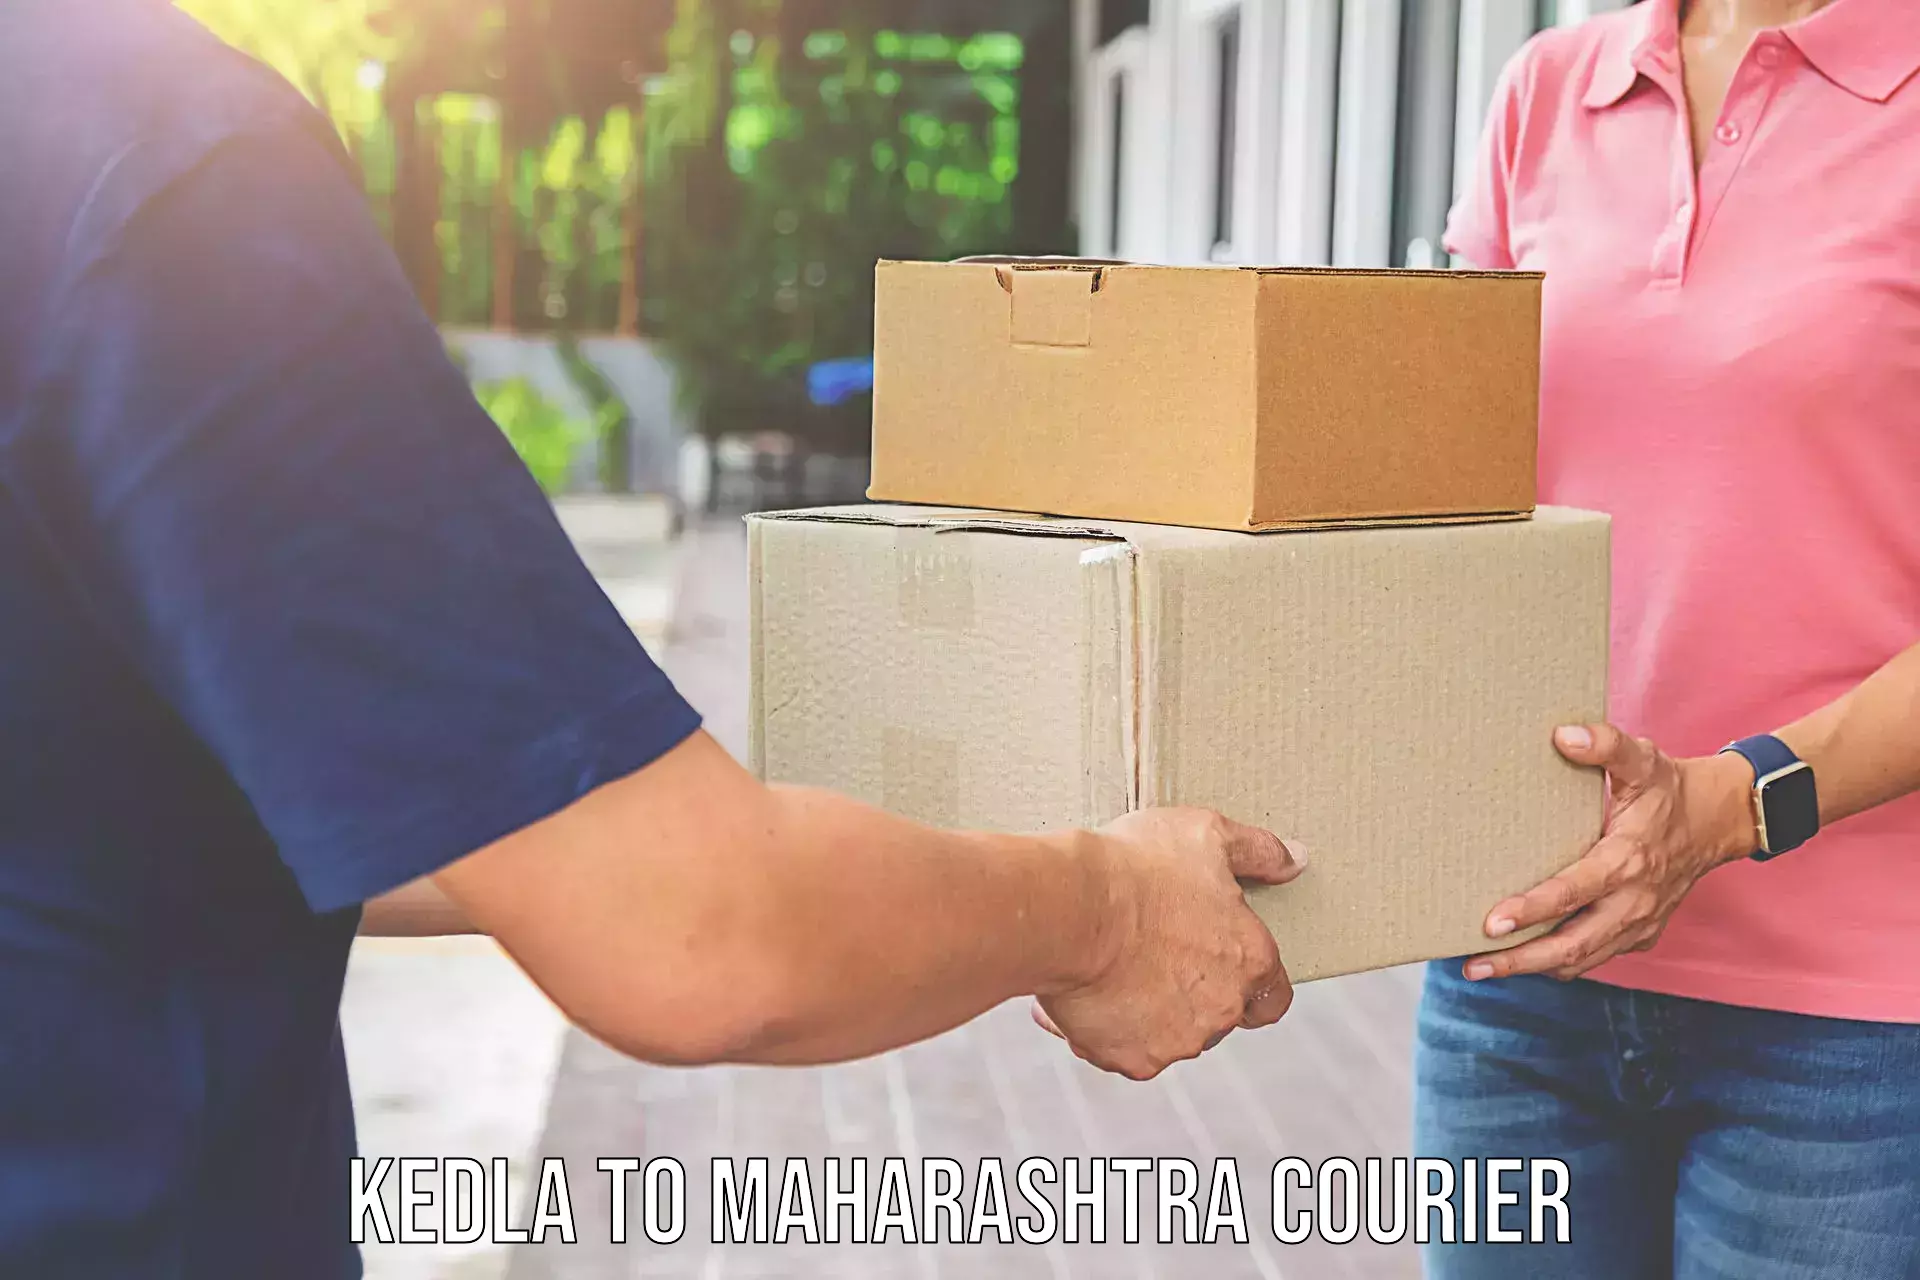 Skilled furniture transporters Kedla to Maharashtra